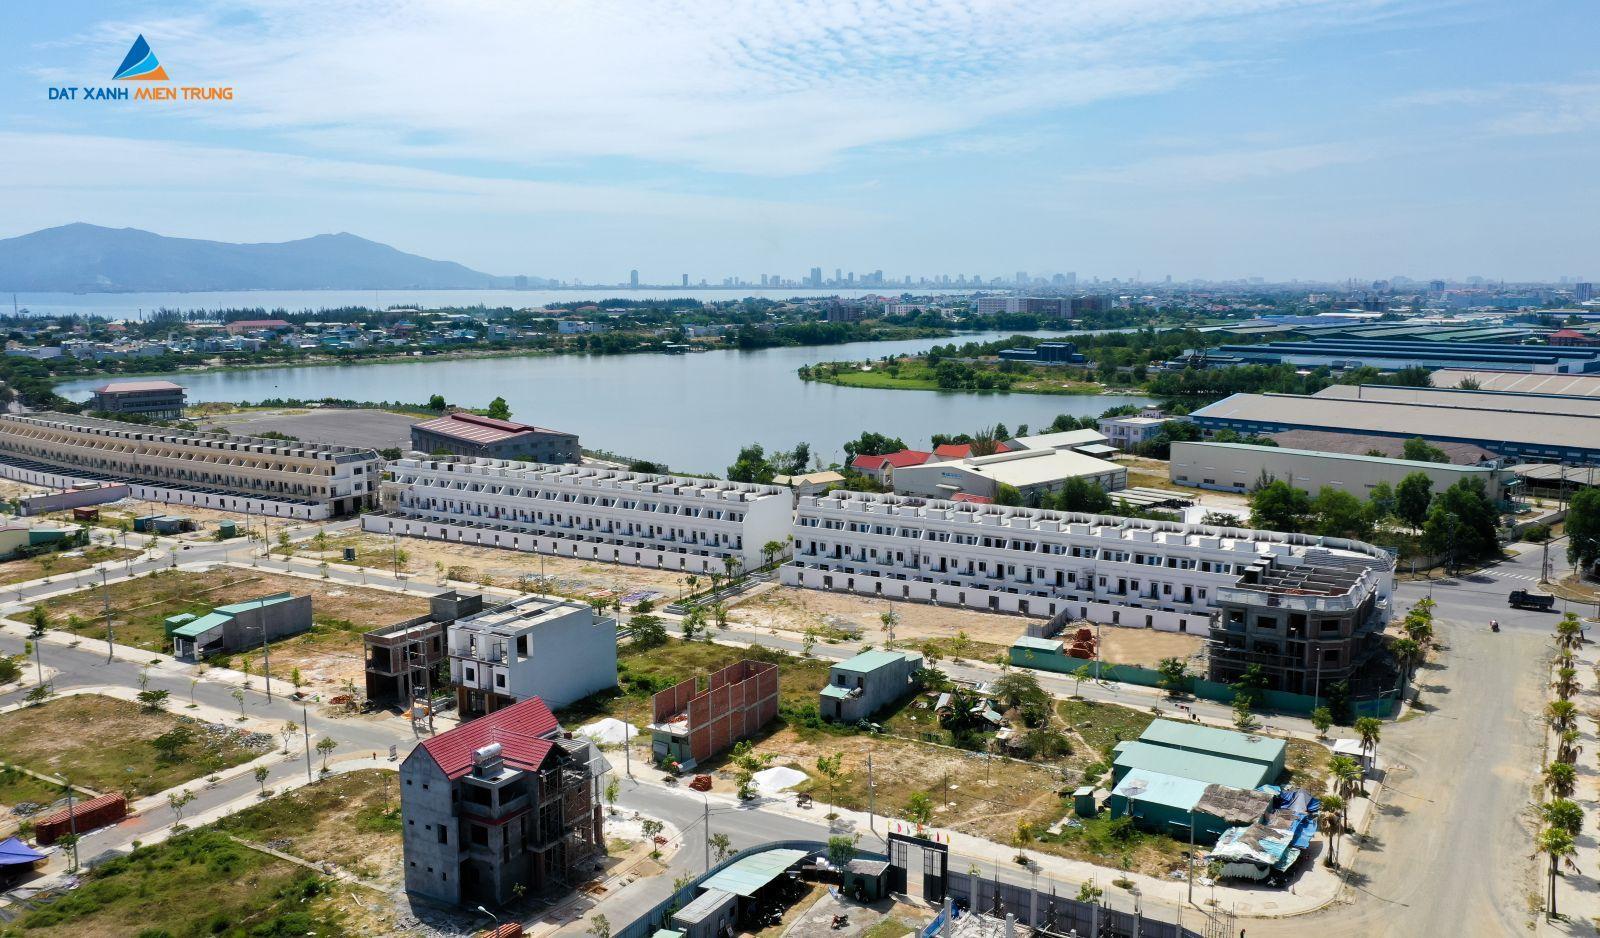 [GÓC CẬP NHẬT] DỰ ÁN SHOPHOUSE LAKESIDE PALACE VÀ LAKESIDE INFINITY THÁNG 07/2019 - Viet Nam Smart City